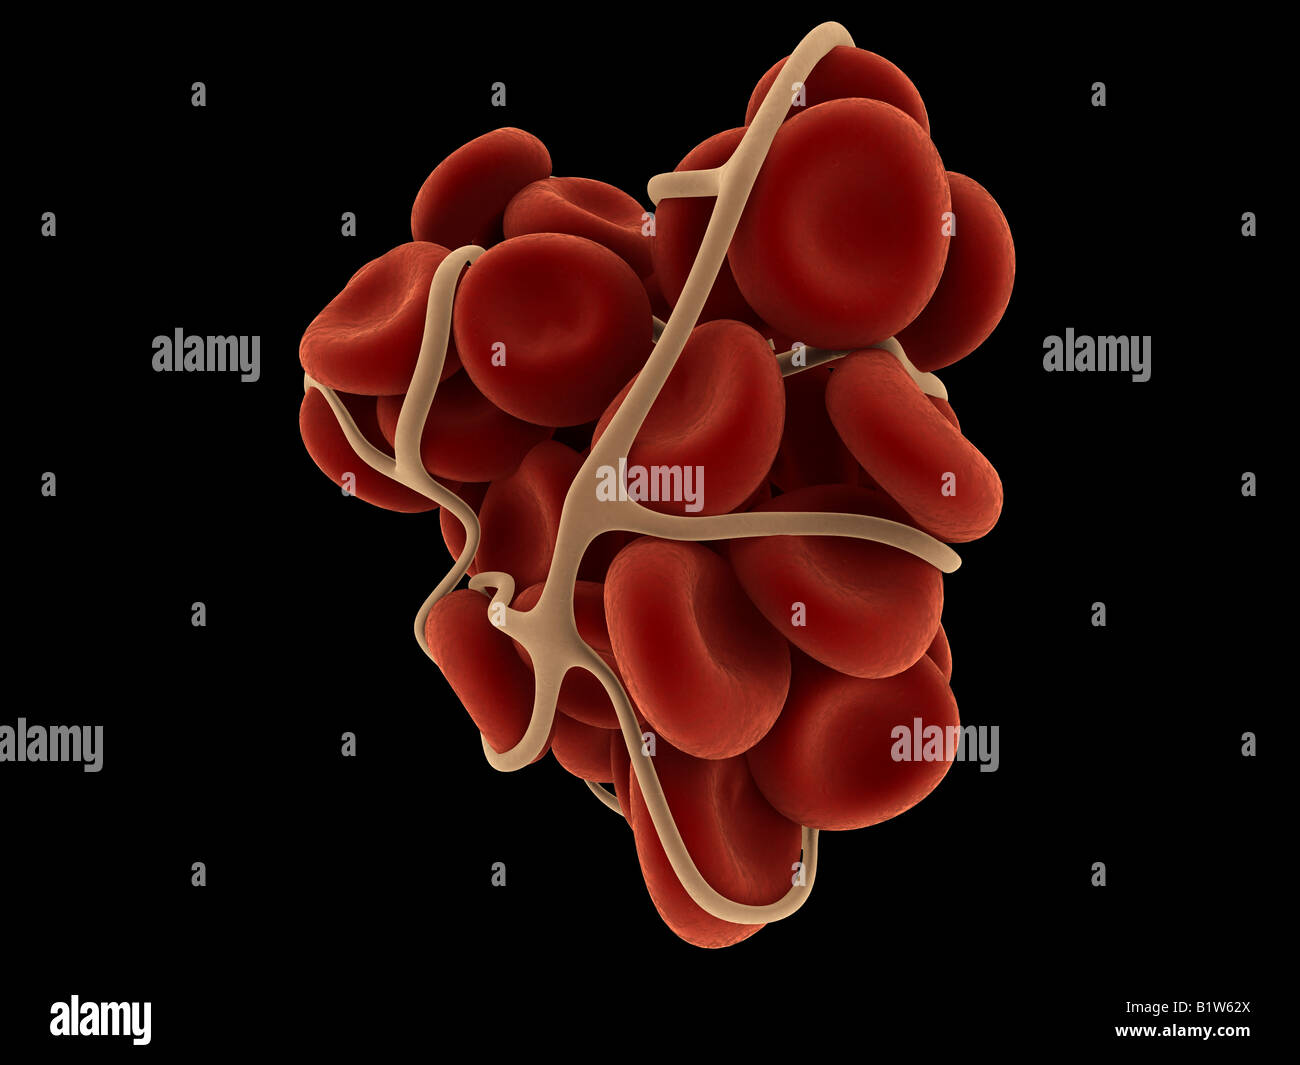 blood clot Stock Photo